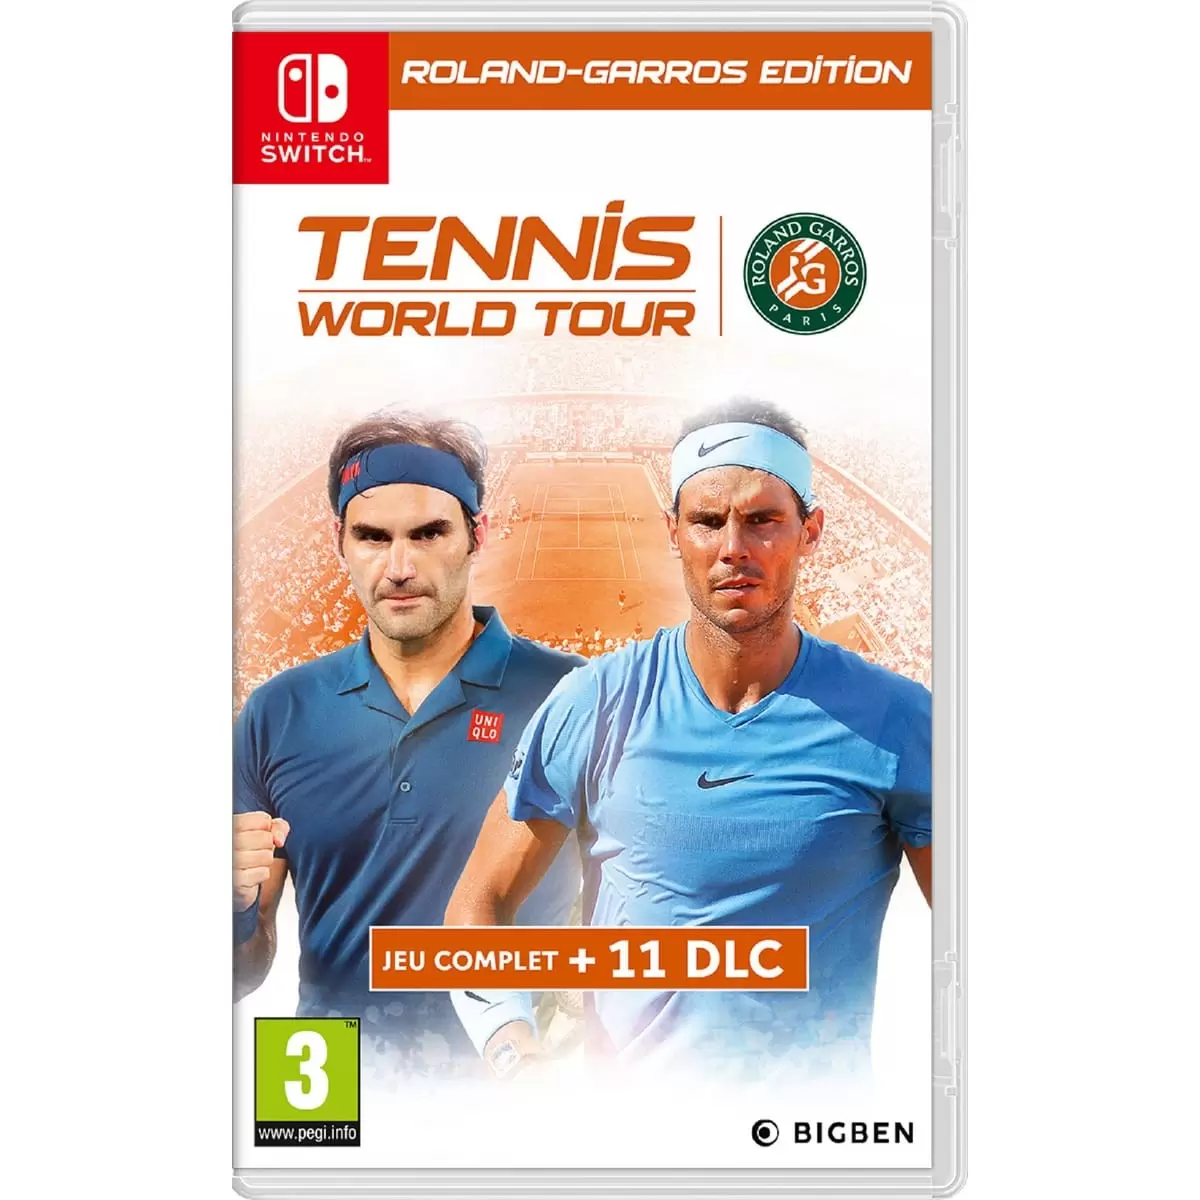 Nintendo Switch Games - Tennis World Tour Roland Garros